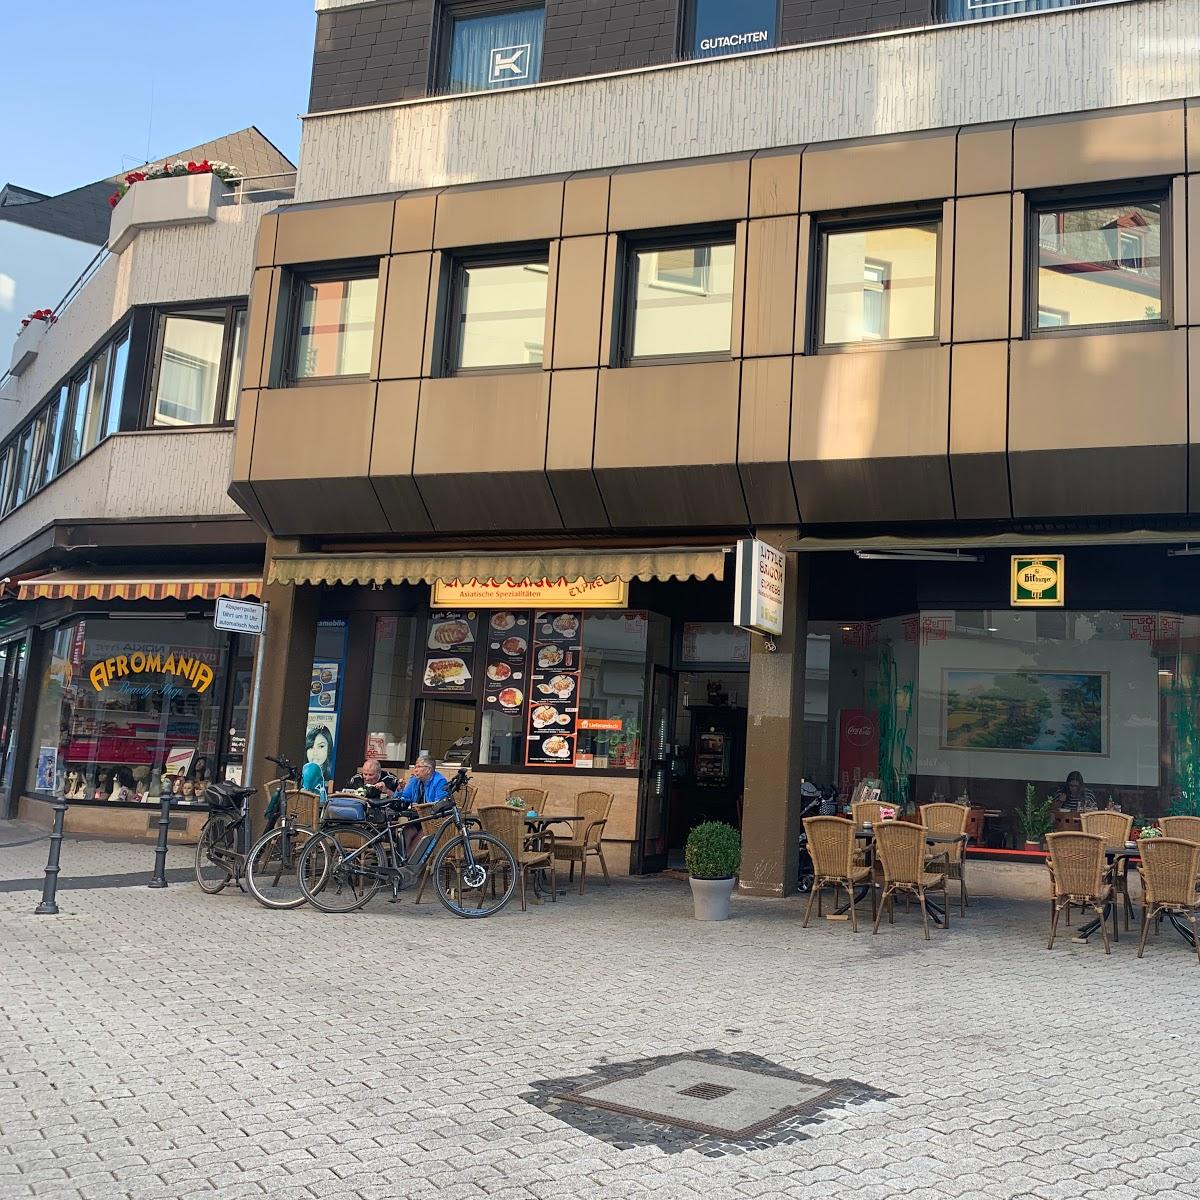 Restaurant "Little Saigon" in Koblenz